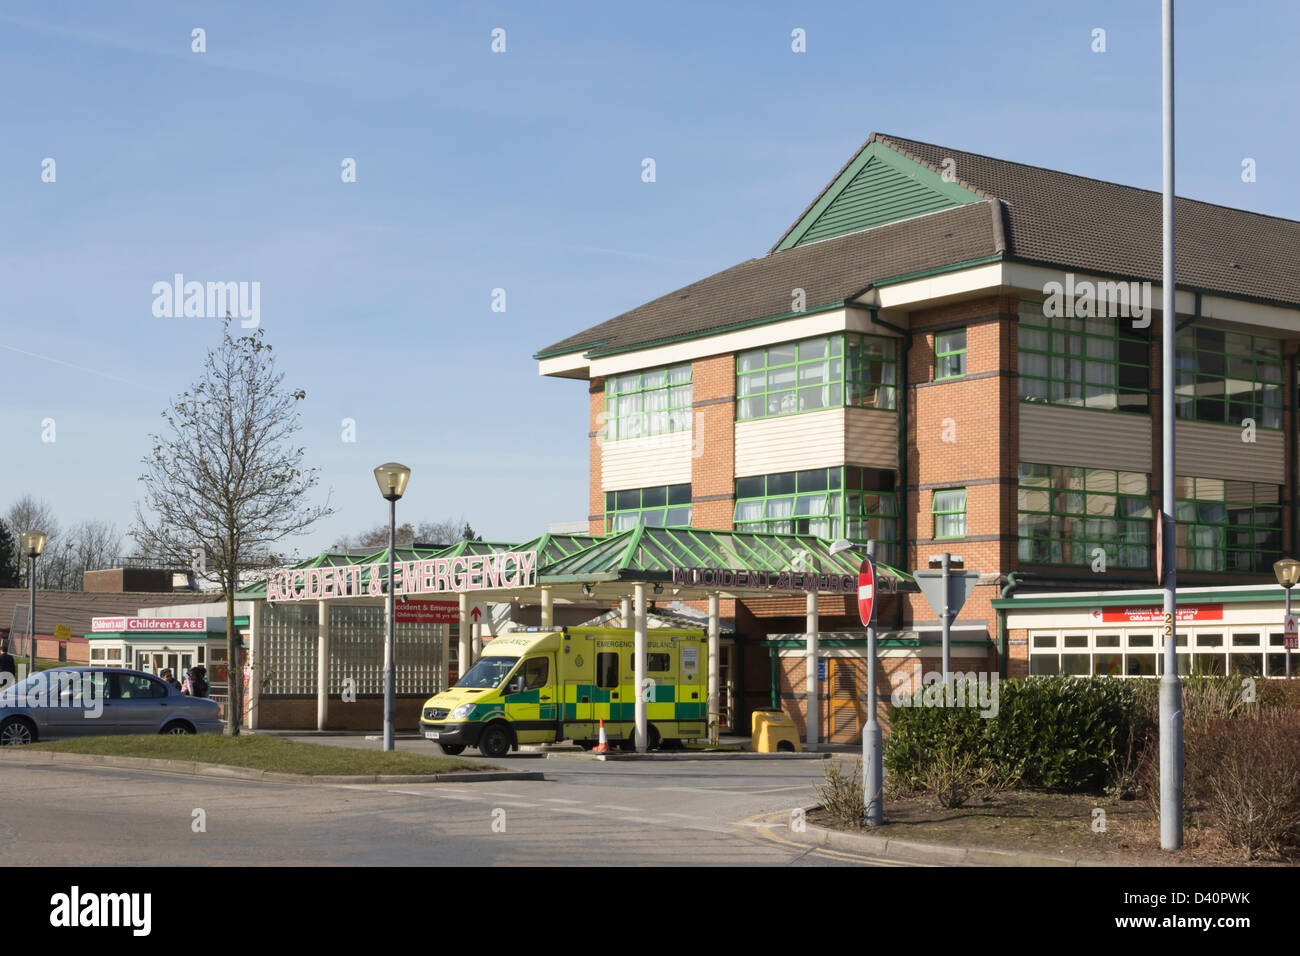 Royal Bolton Hospital,Lancashire. 28th February 2013. Accident & Emergency entrance with one ambulance parked outside. Stock Photo